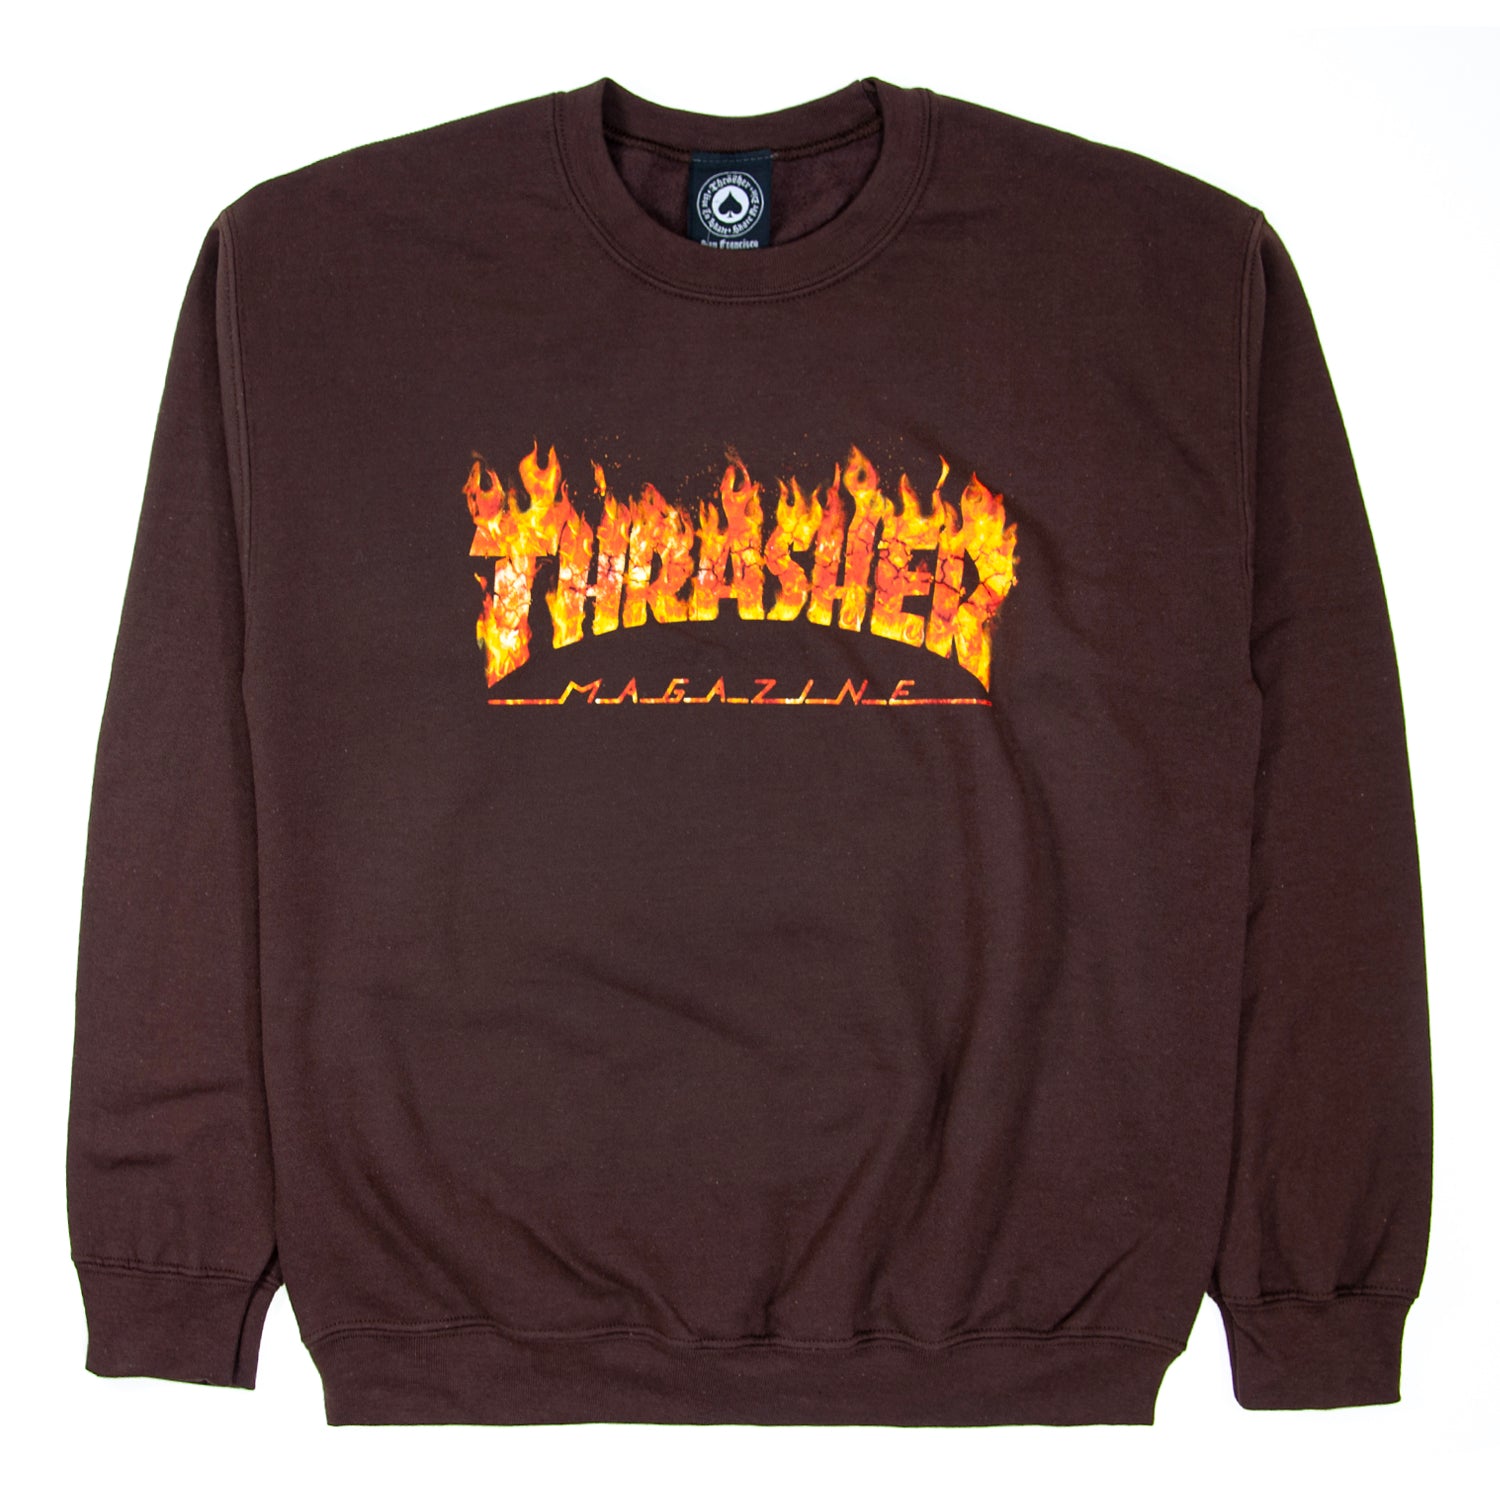 Thrasher Inferno Crew Sweatshirt - Dark Chocolate - Prime Delux Store